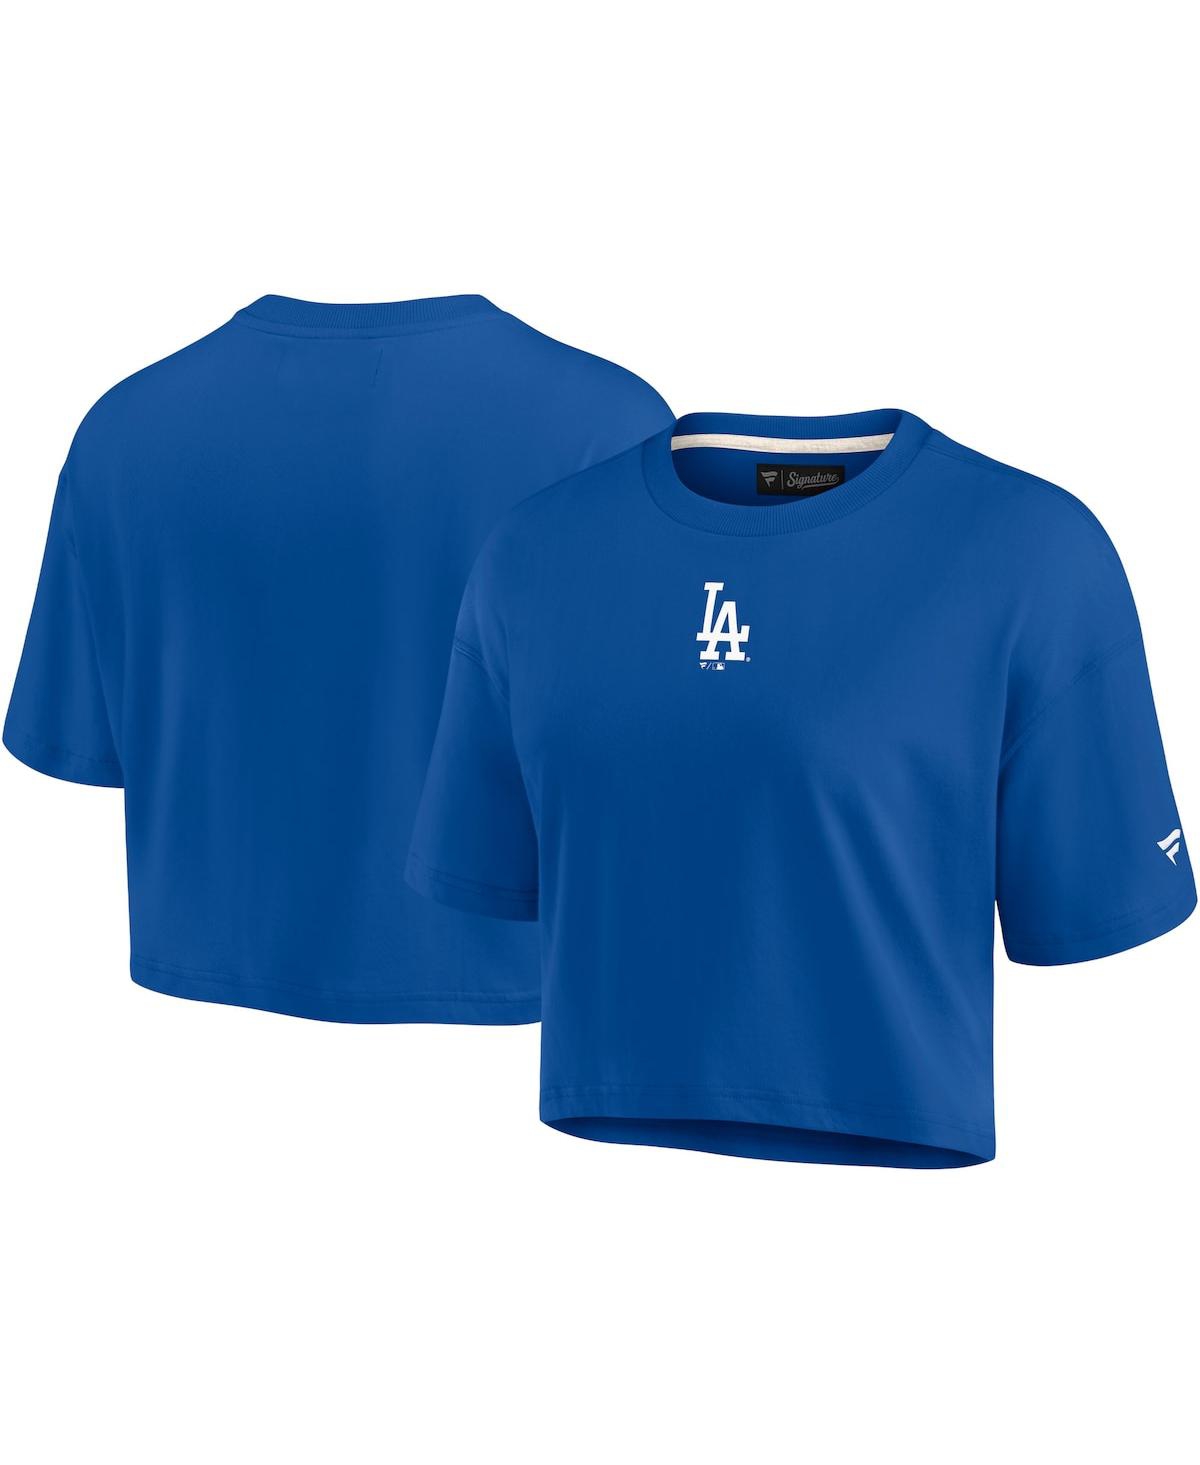 Shop Fanatics Signature Women's  Royal Los Angeles Dodgers Super Soft Short Sleeve Cropped T-shirt